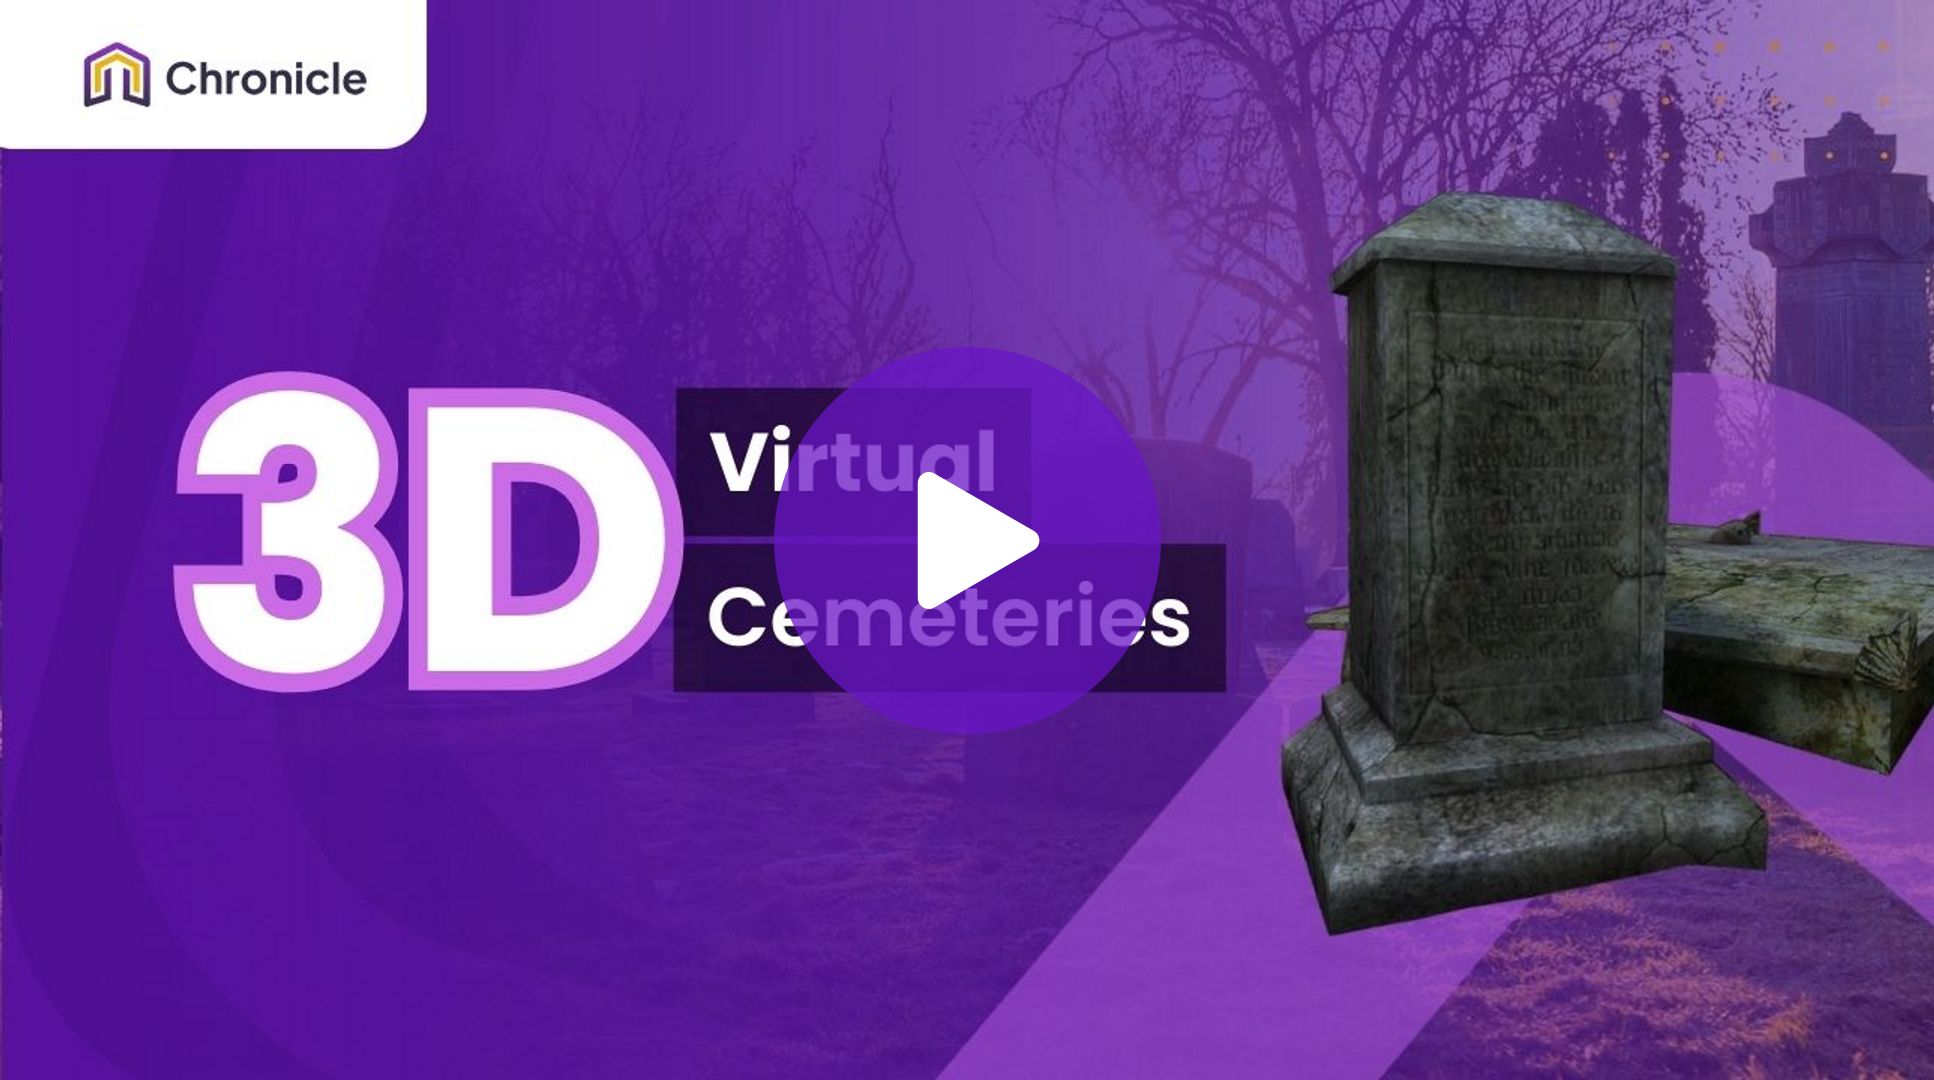 Creating virtual cemeteries